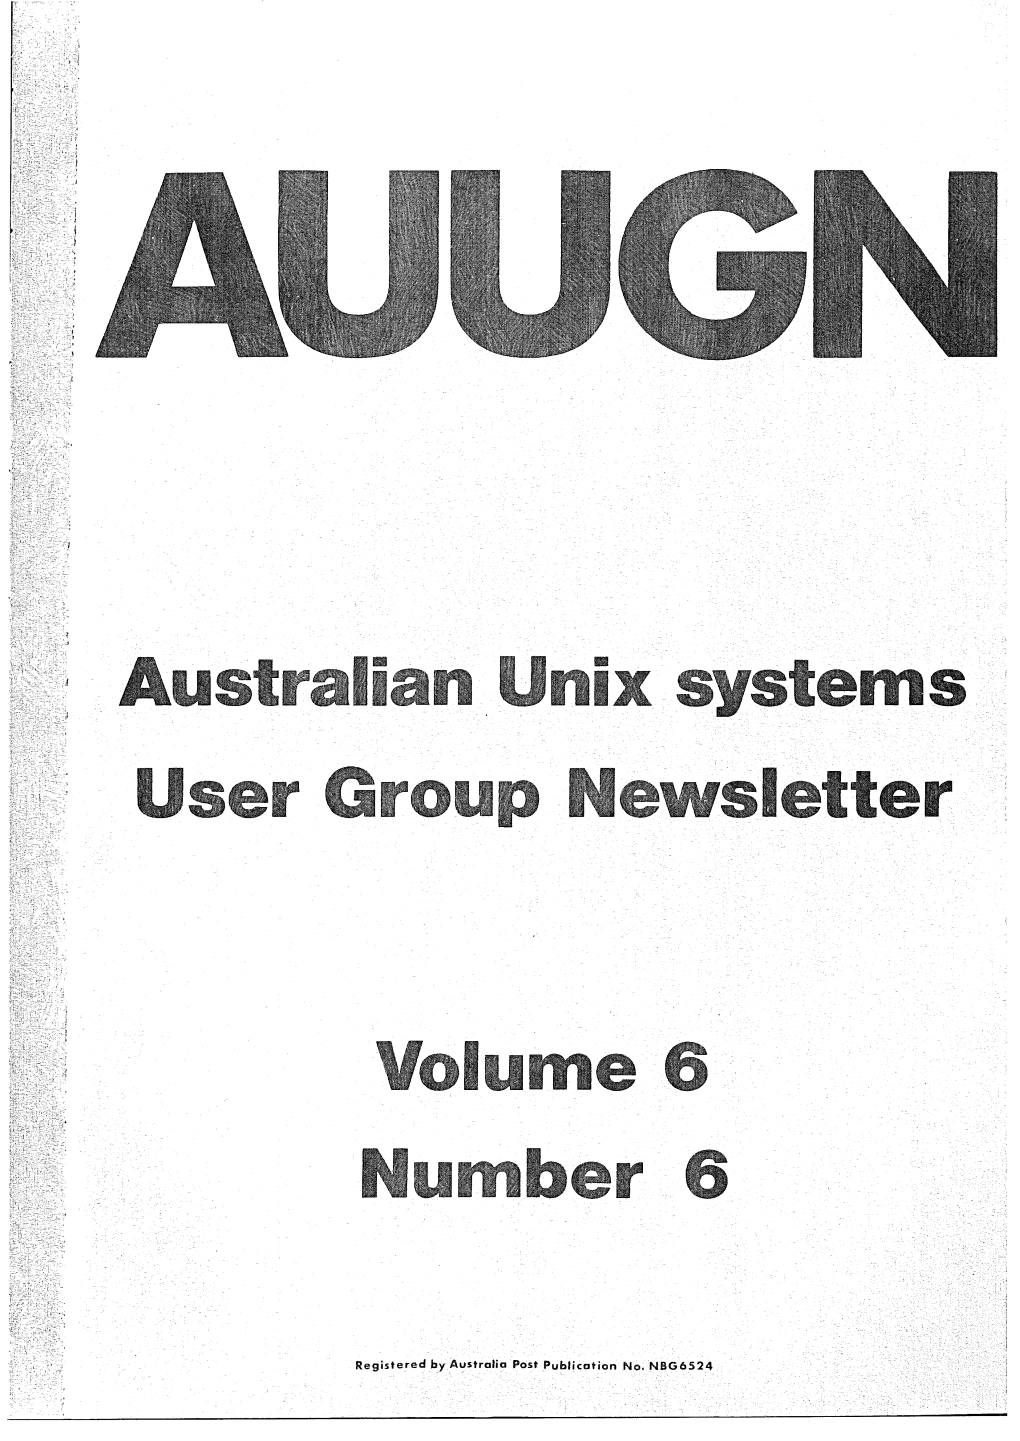 Registered by Australia Post Publication No. I~BG6524